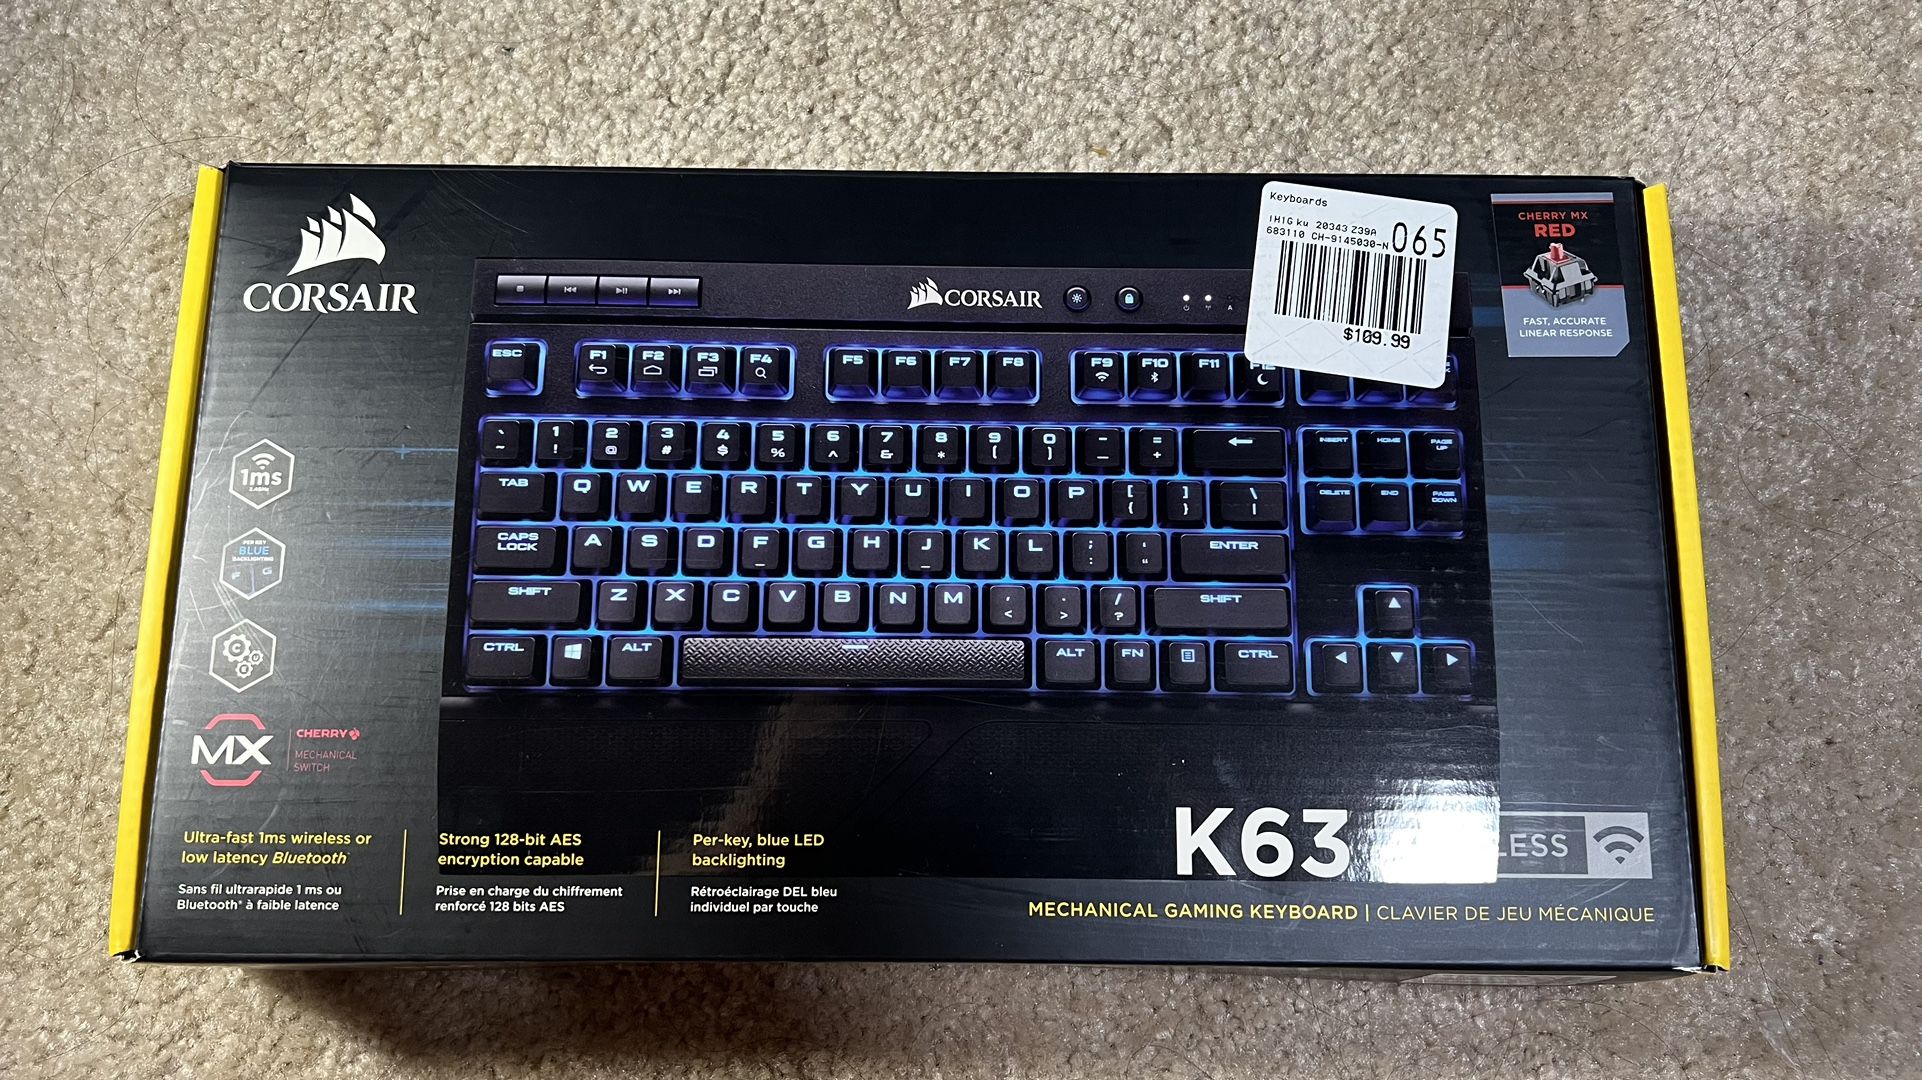 Corsair wireless keyboard K63